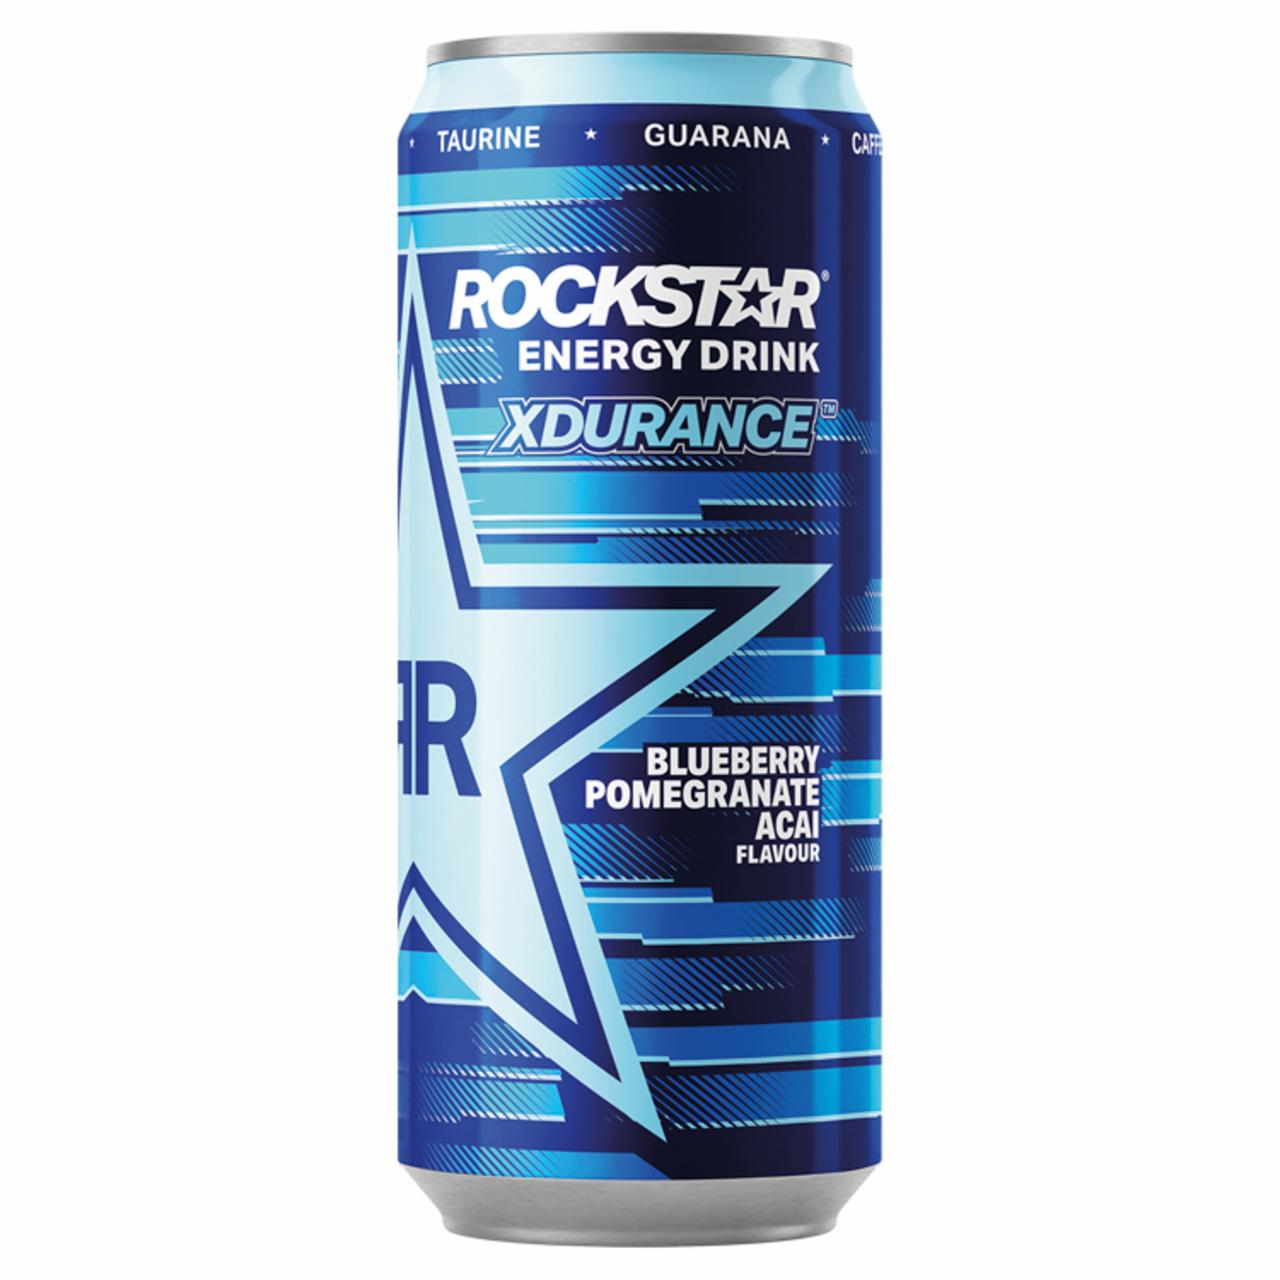 Zdjęcia - Rockstar Energy Drink XDurance Blueberry Pomegranate Acai